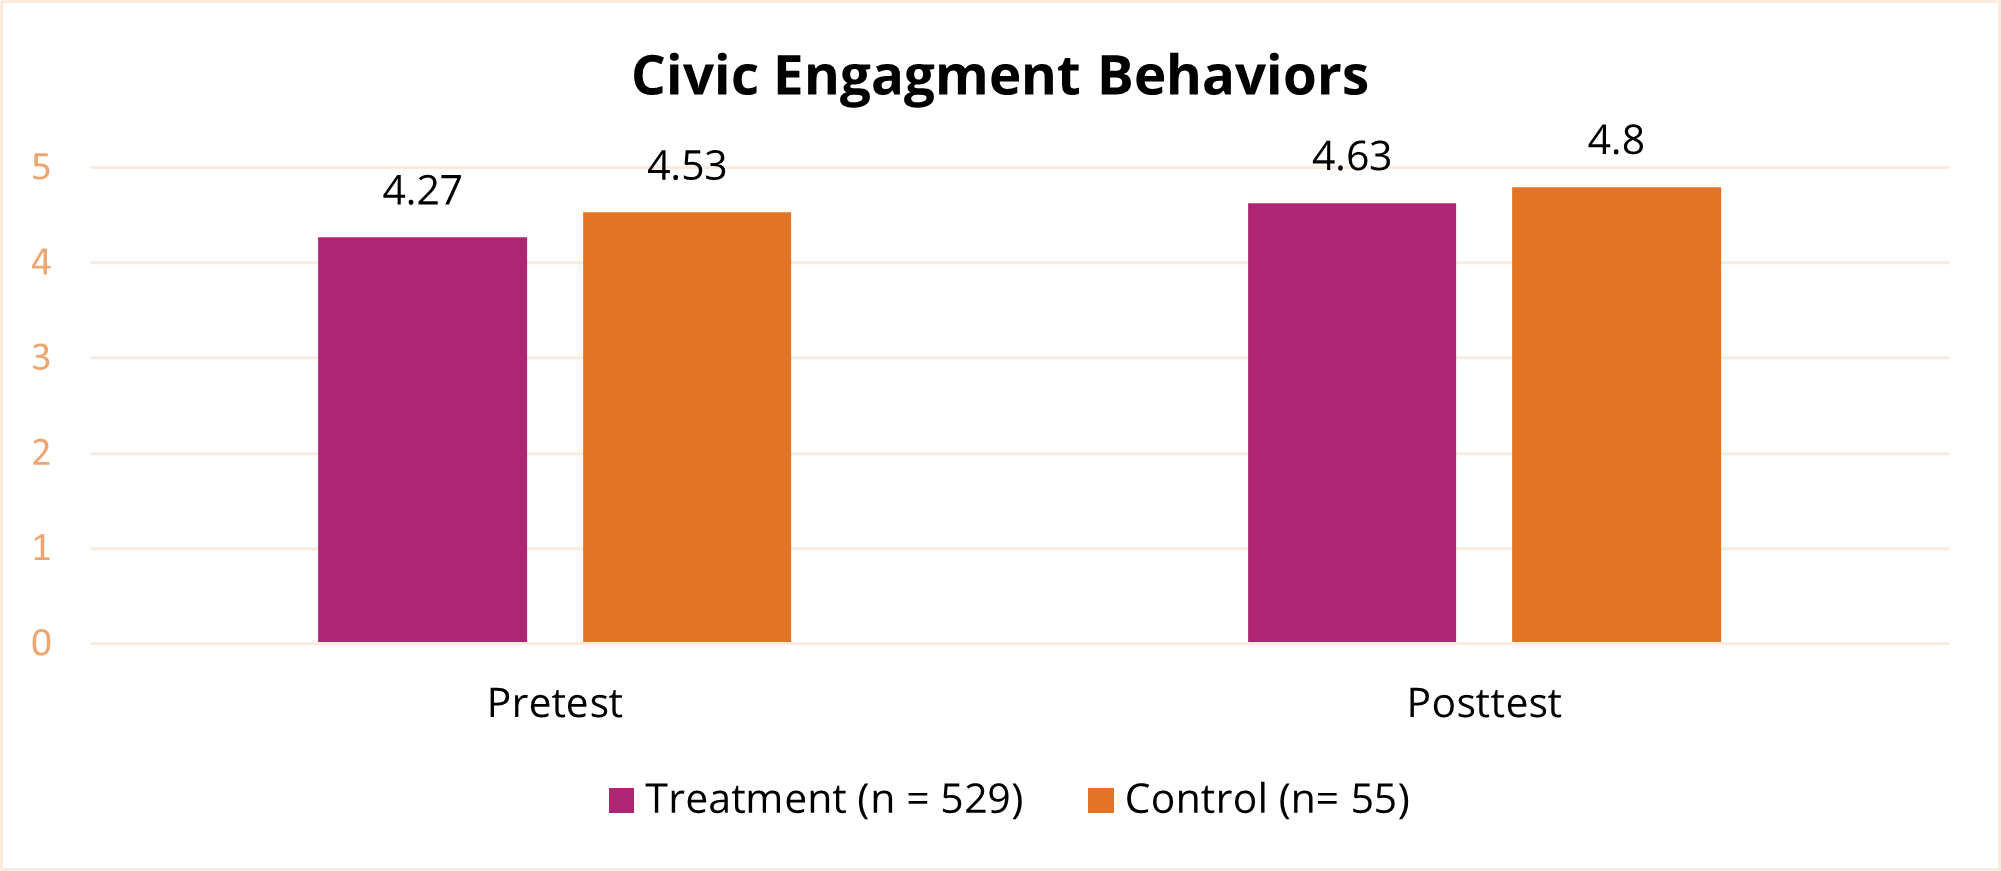 Civic Engagement Behaviors